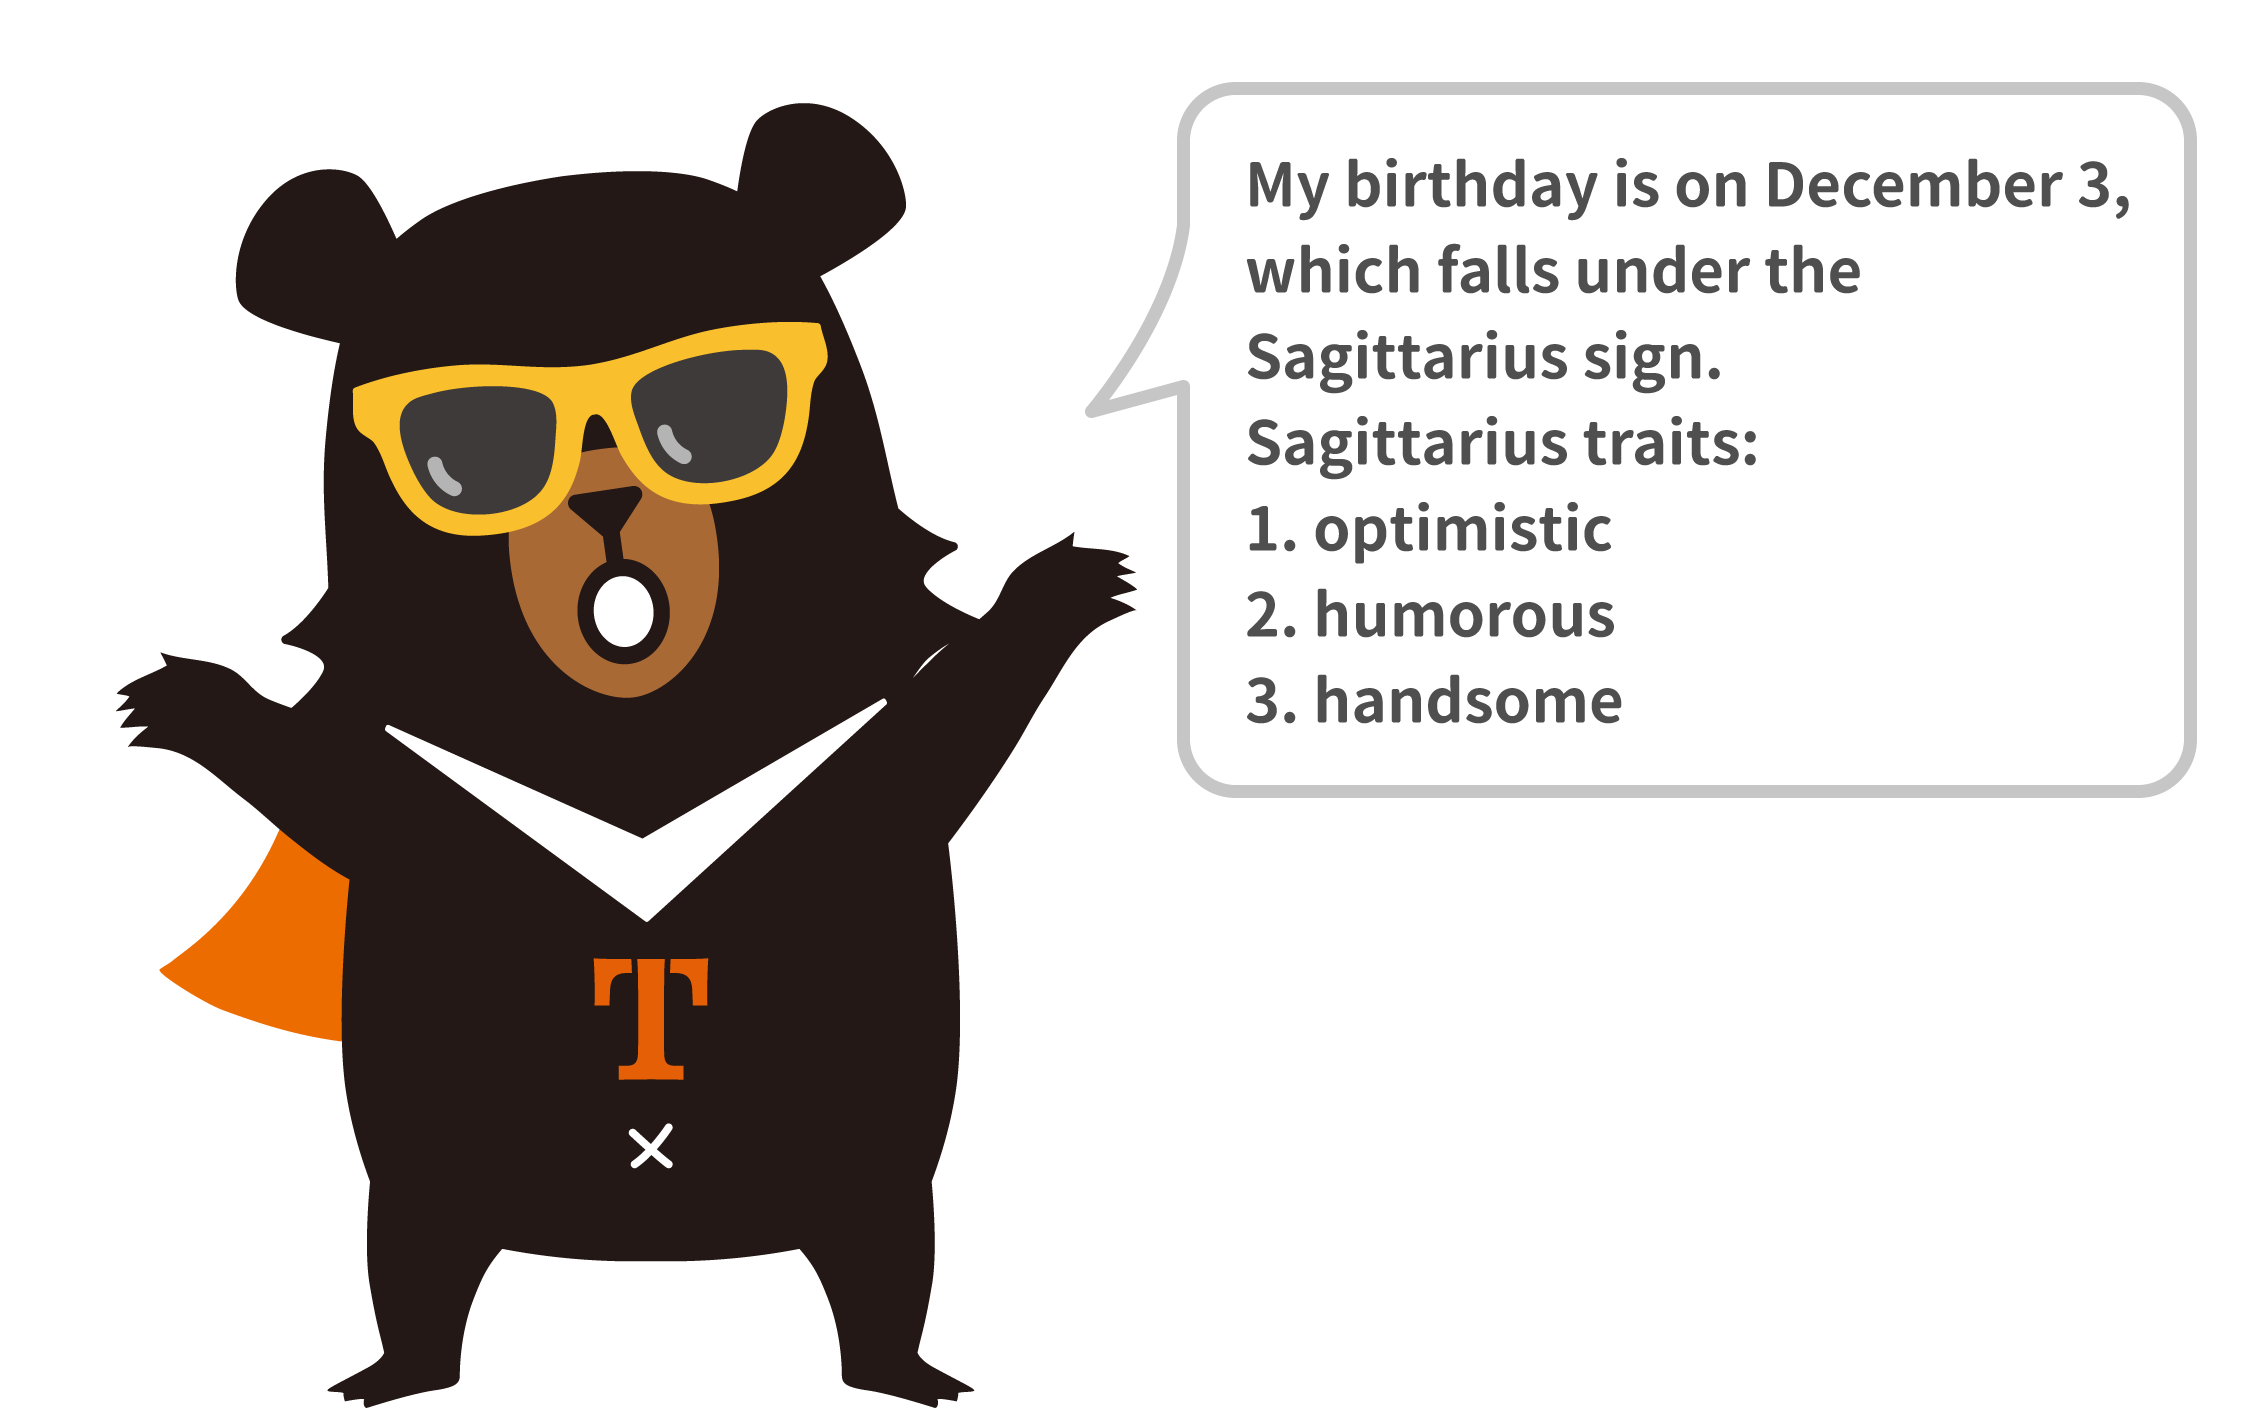 My birthday is on December 3, which falls under the Sagittarius sign.
Sagittarius traits:
1. optimistic
2. humorous
3. handsome
